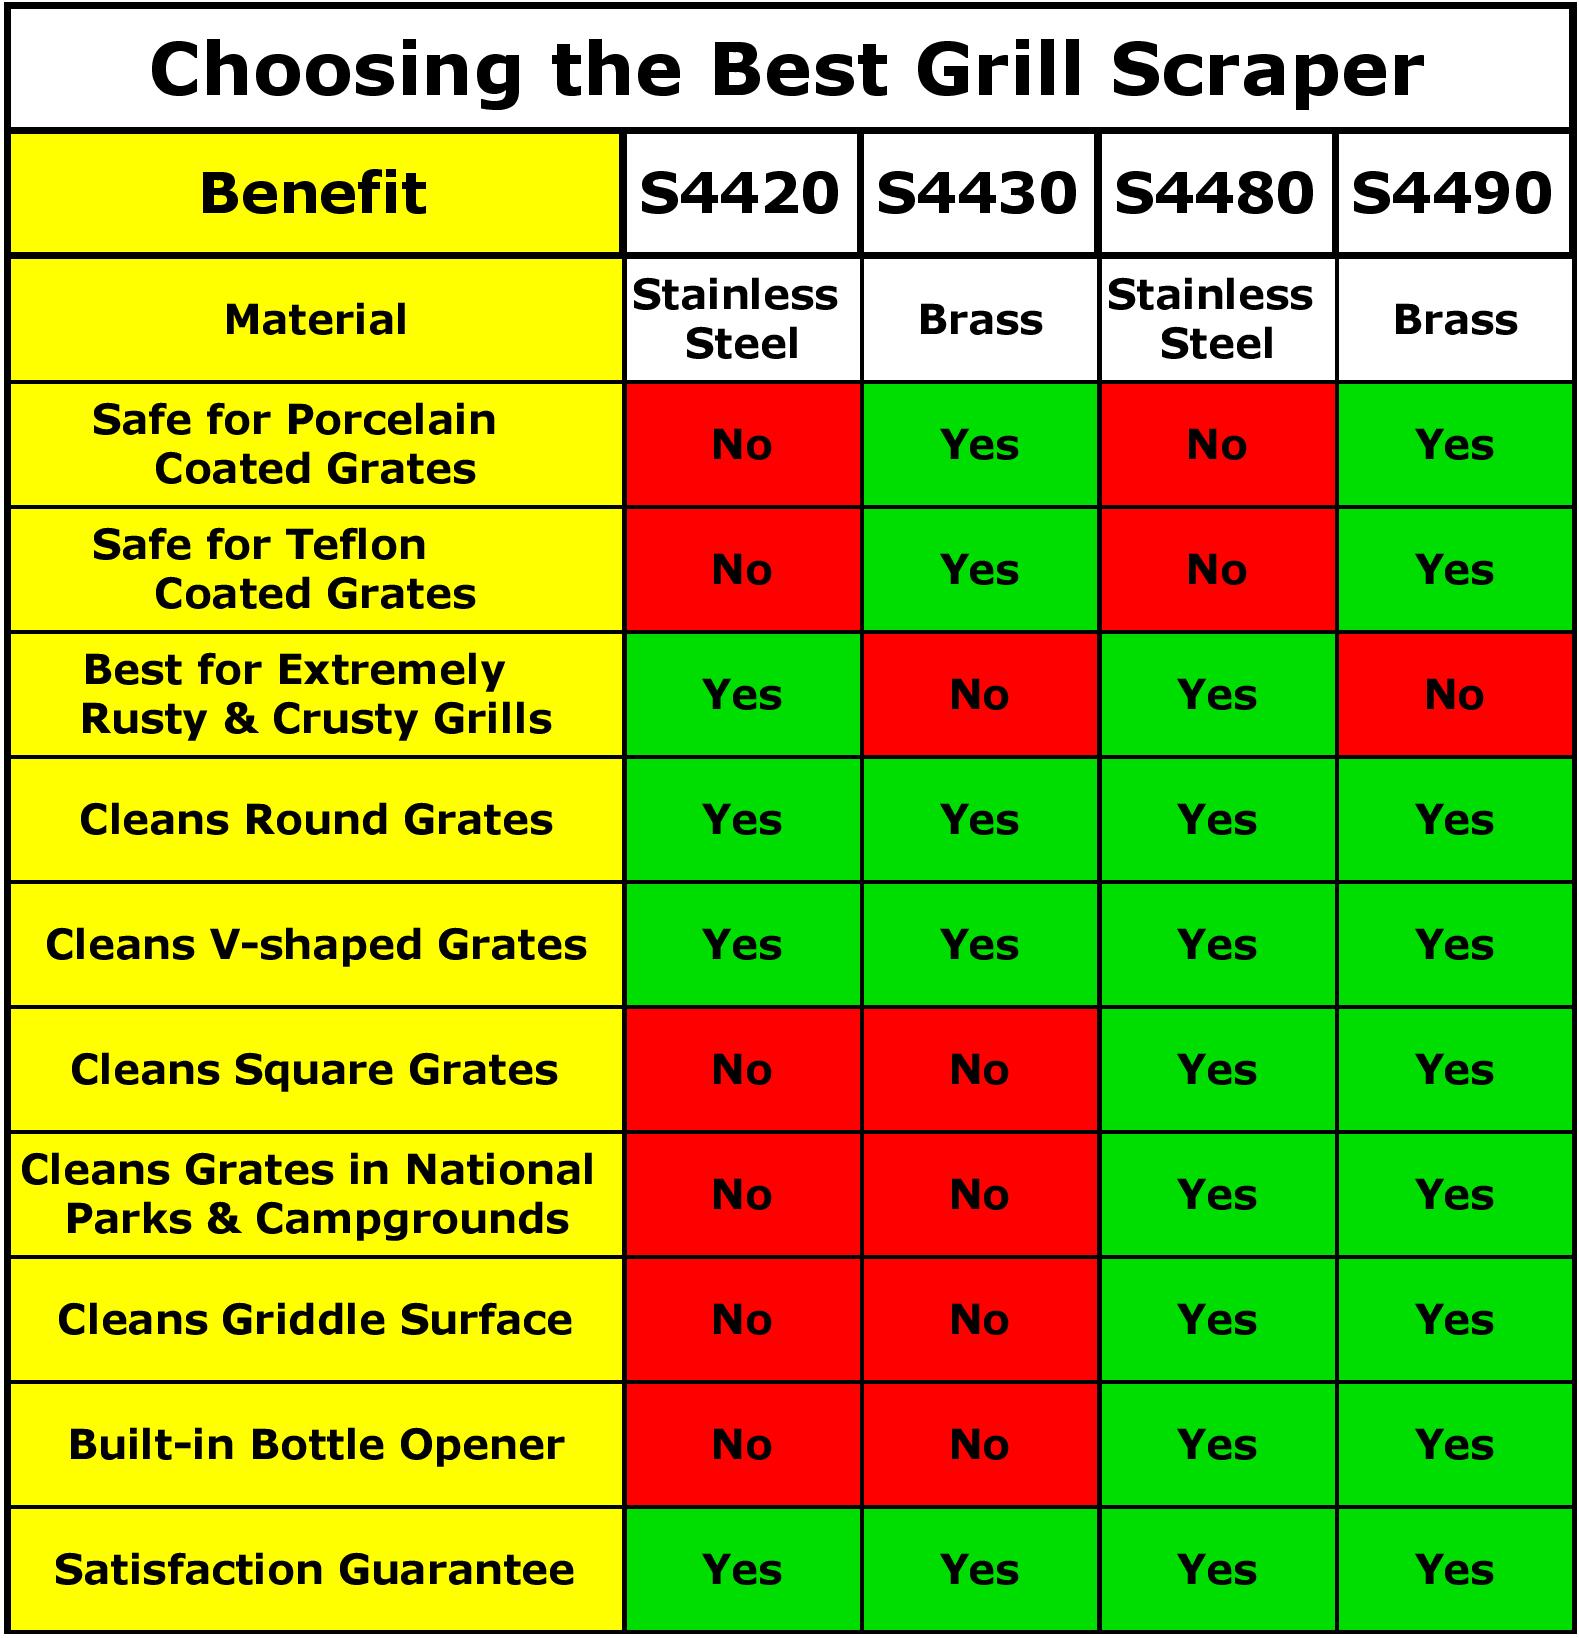 S4430 - The Grate Grill Scraper - Brass Barbque Grill Cleaner